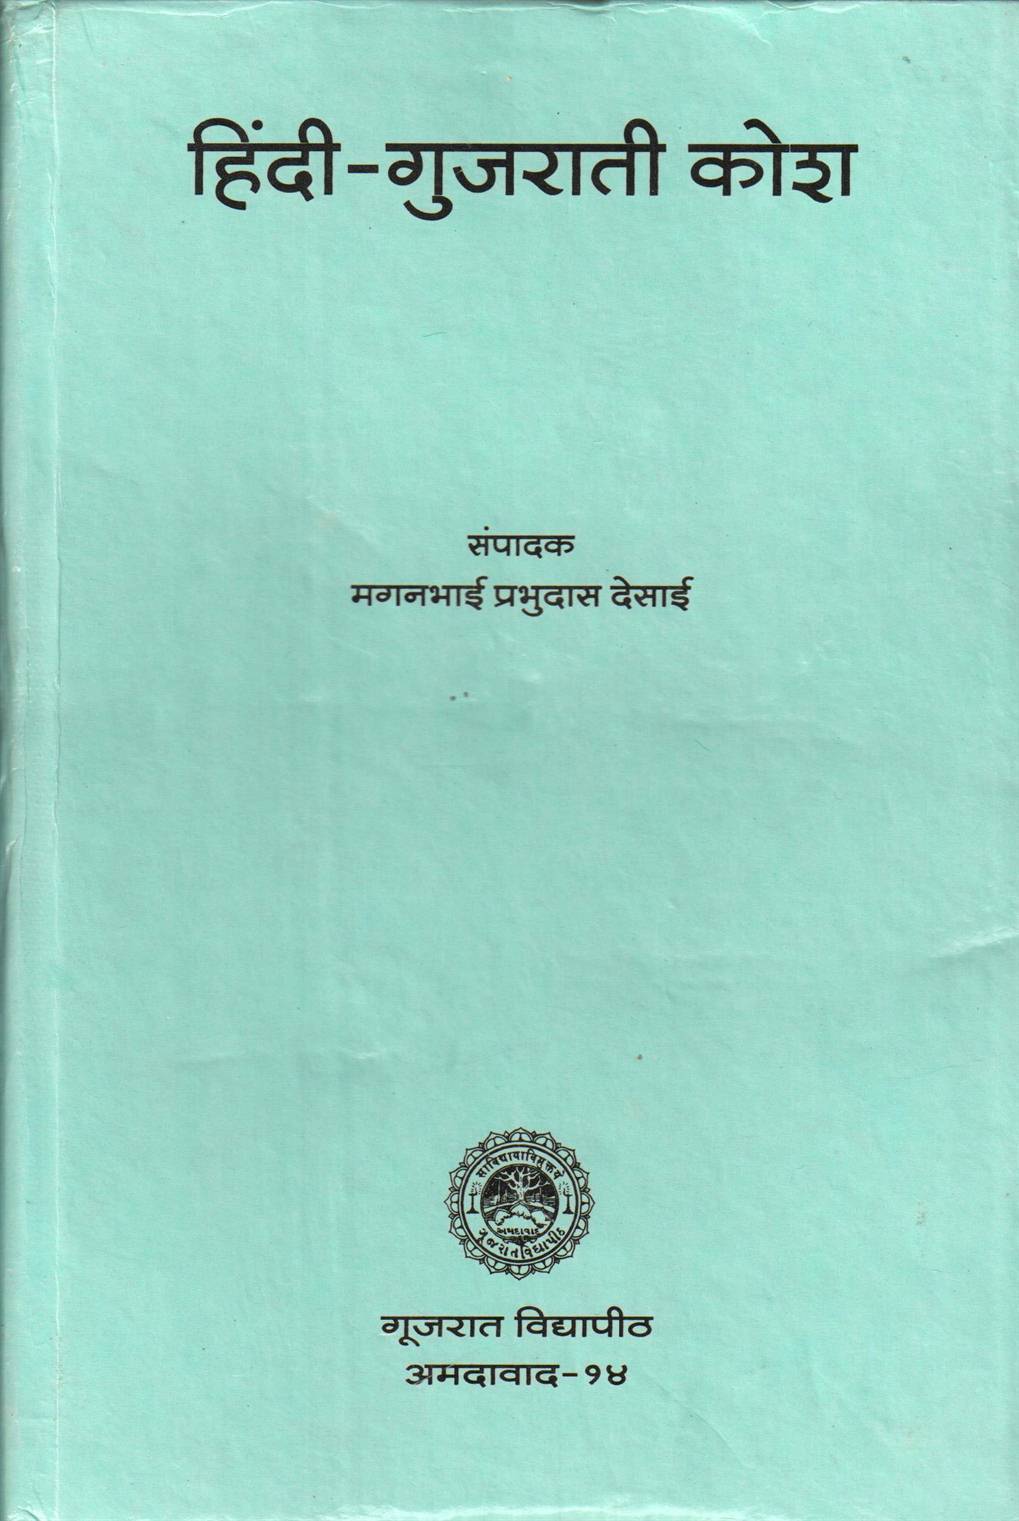 Hindi - Gujarati Kosh (हिंदी - गुजराती कोश)